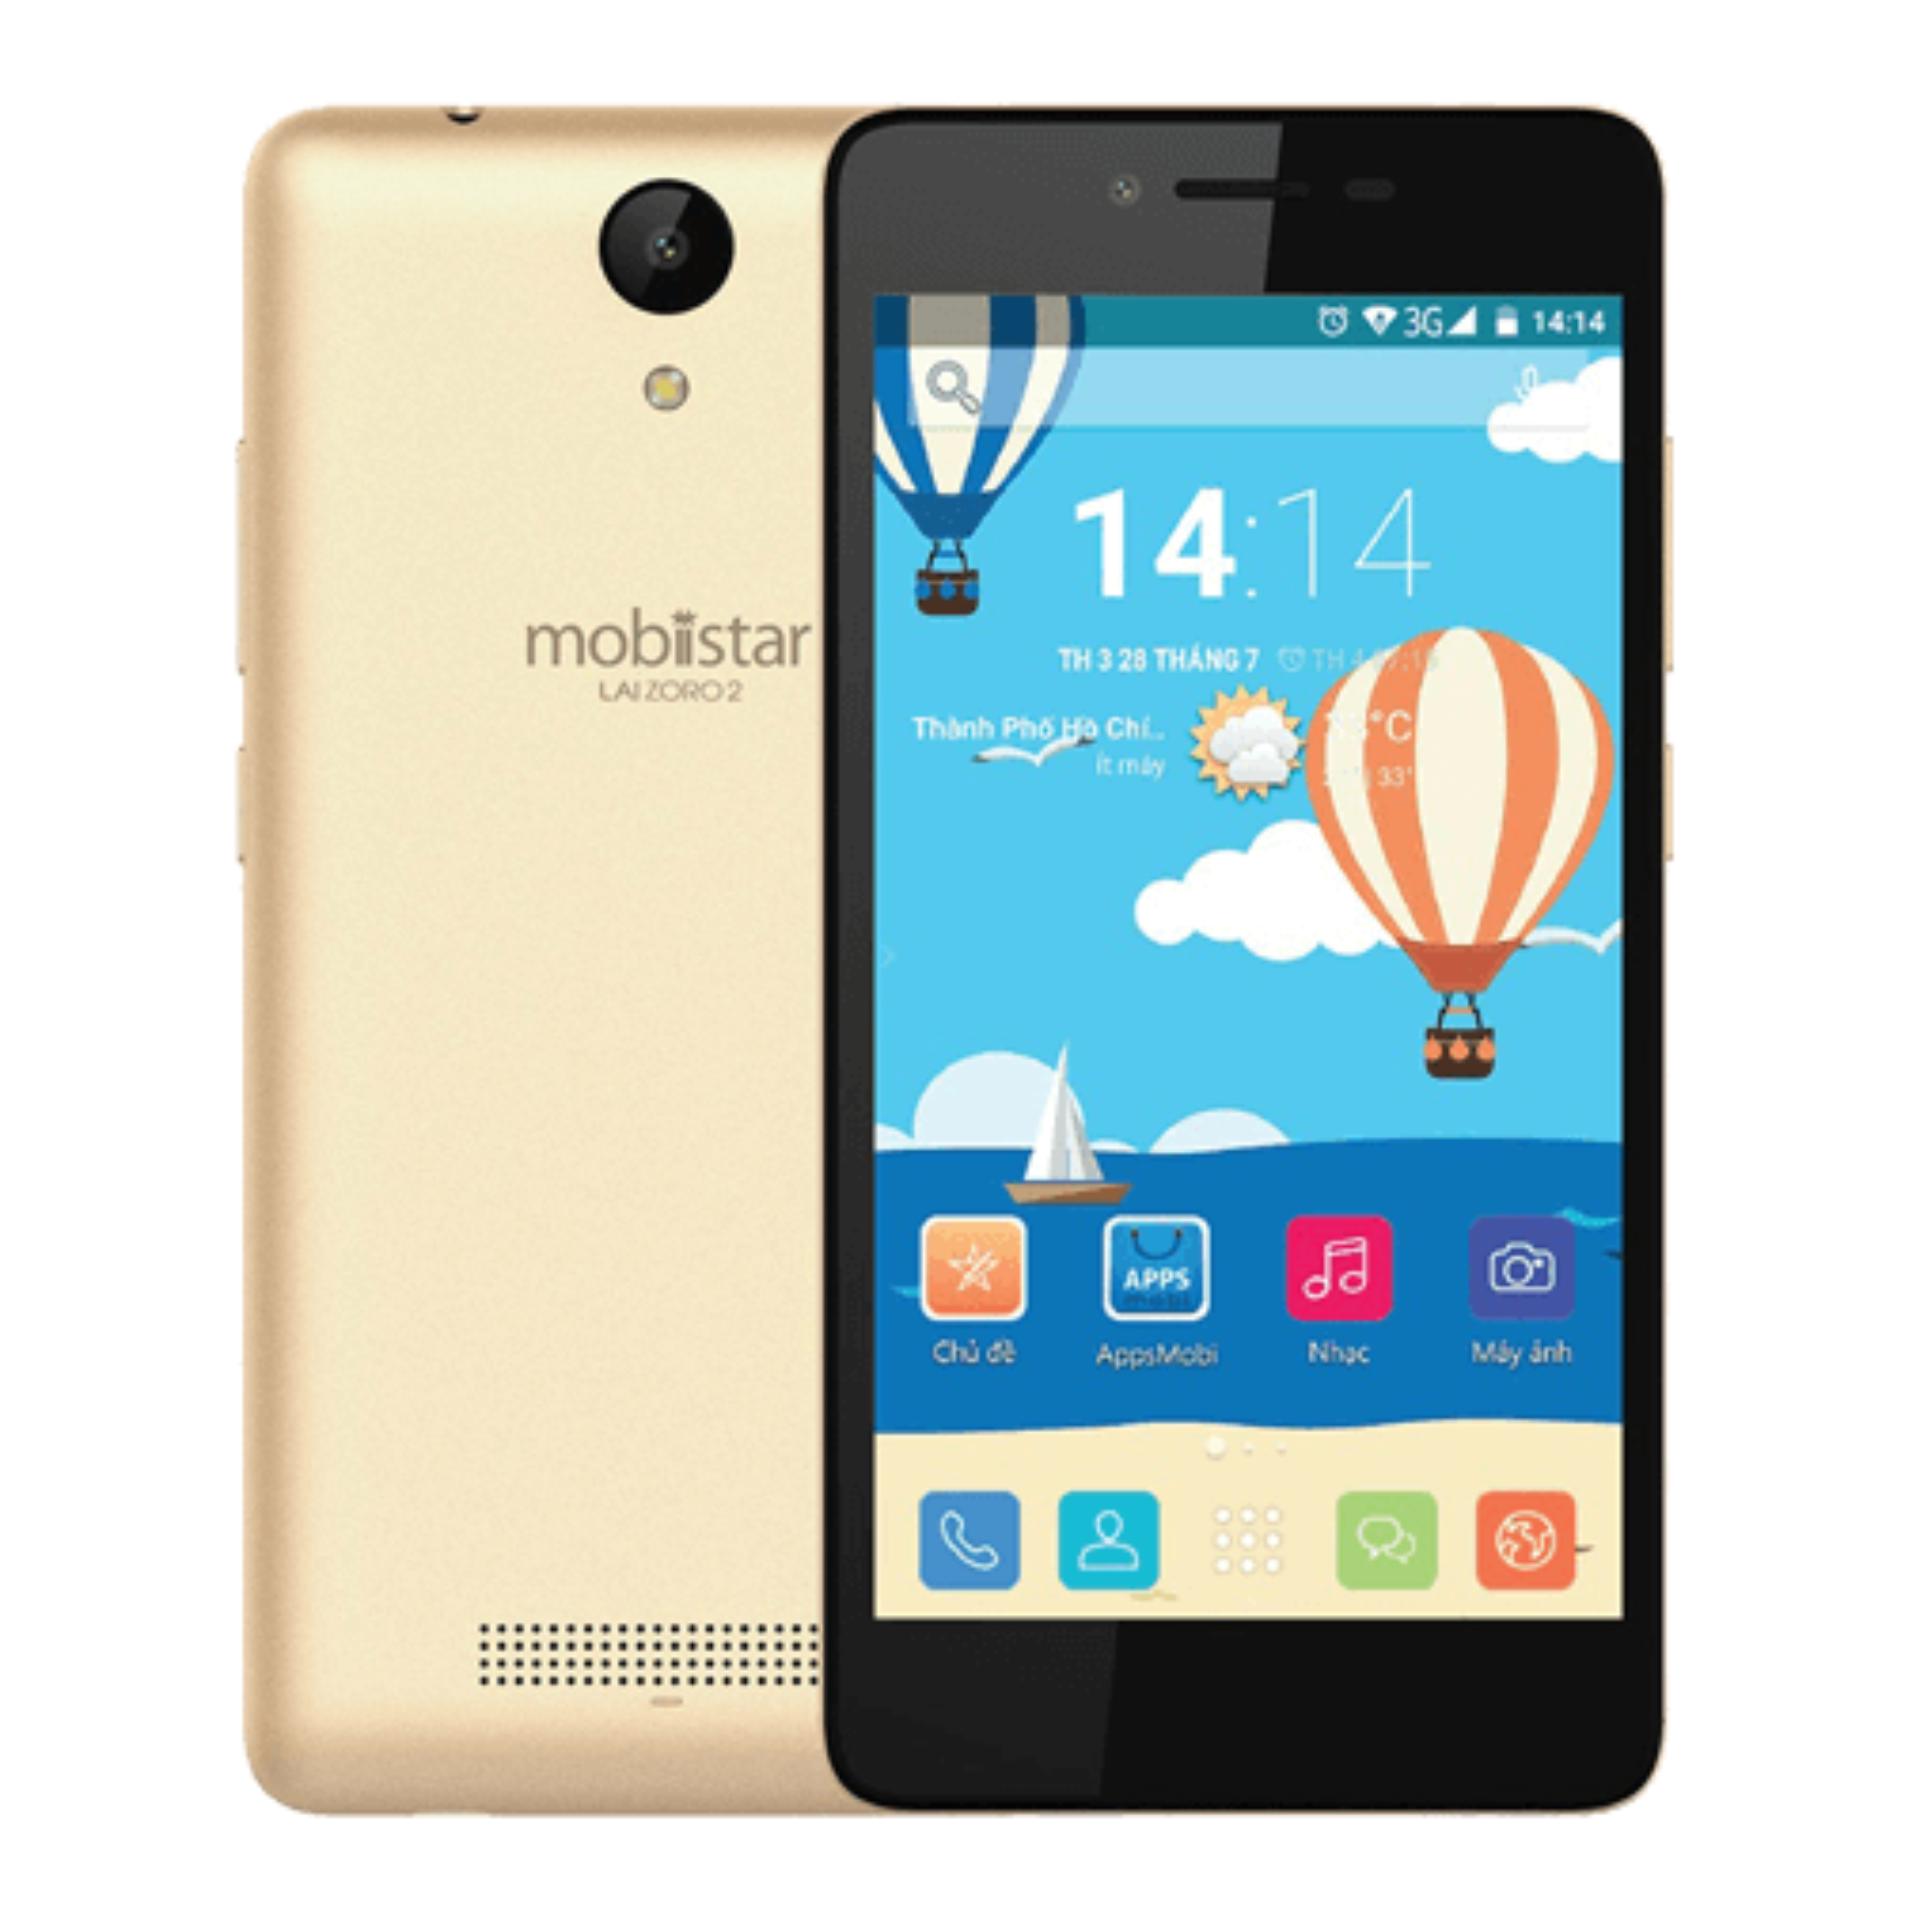 Mobiistar Lai ZORO 2 - Ram:1/Rom:8GB . 2 SIM - Hàng Nhập Khẩu